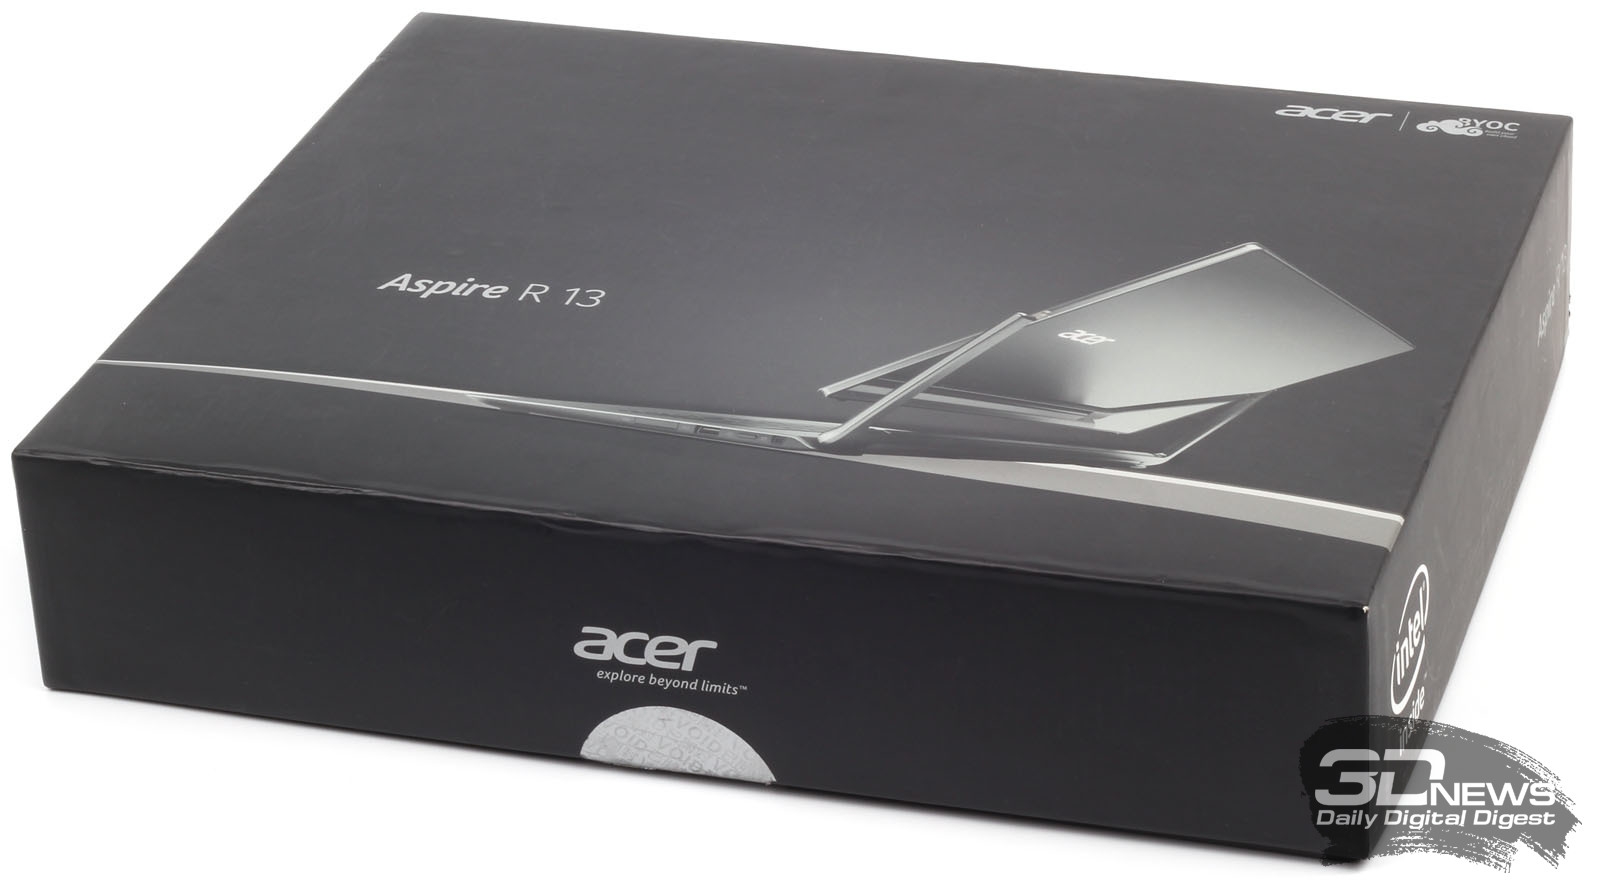 Acer Explore Beyond Limits Ноутбук Цена